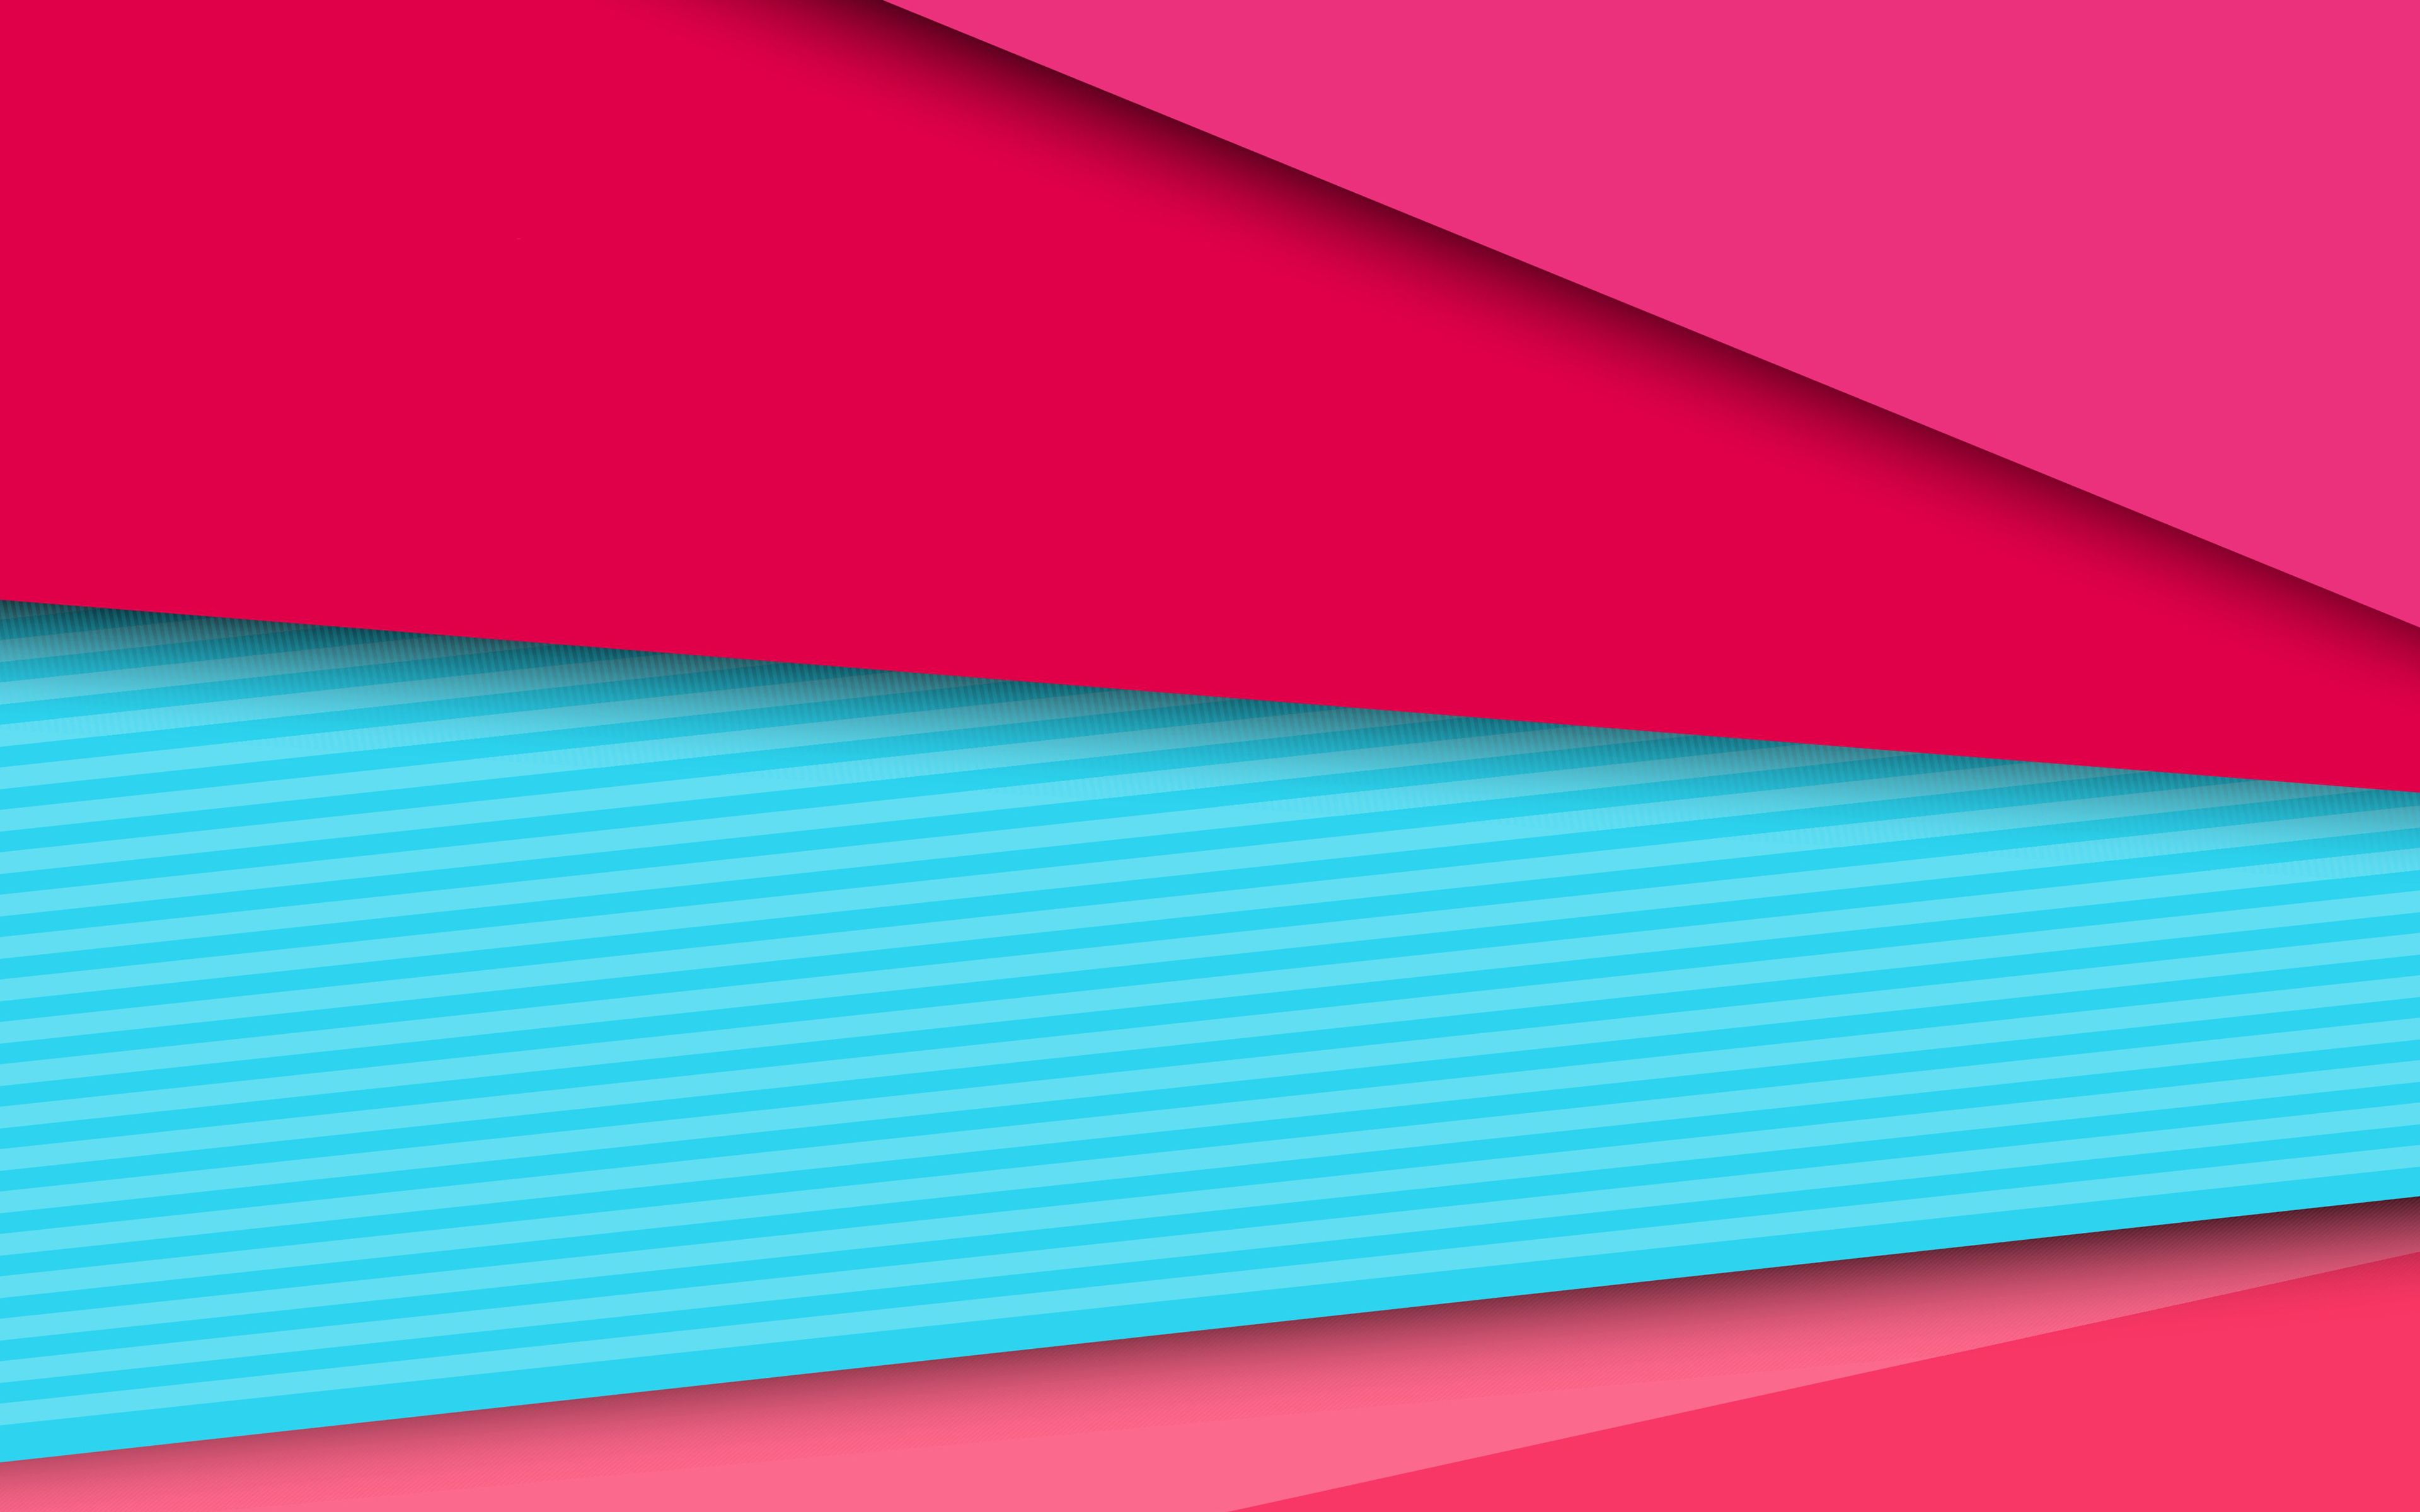 Download wallpaper 4k, material design, pink and blue, creative